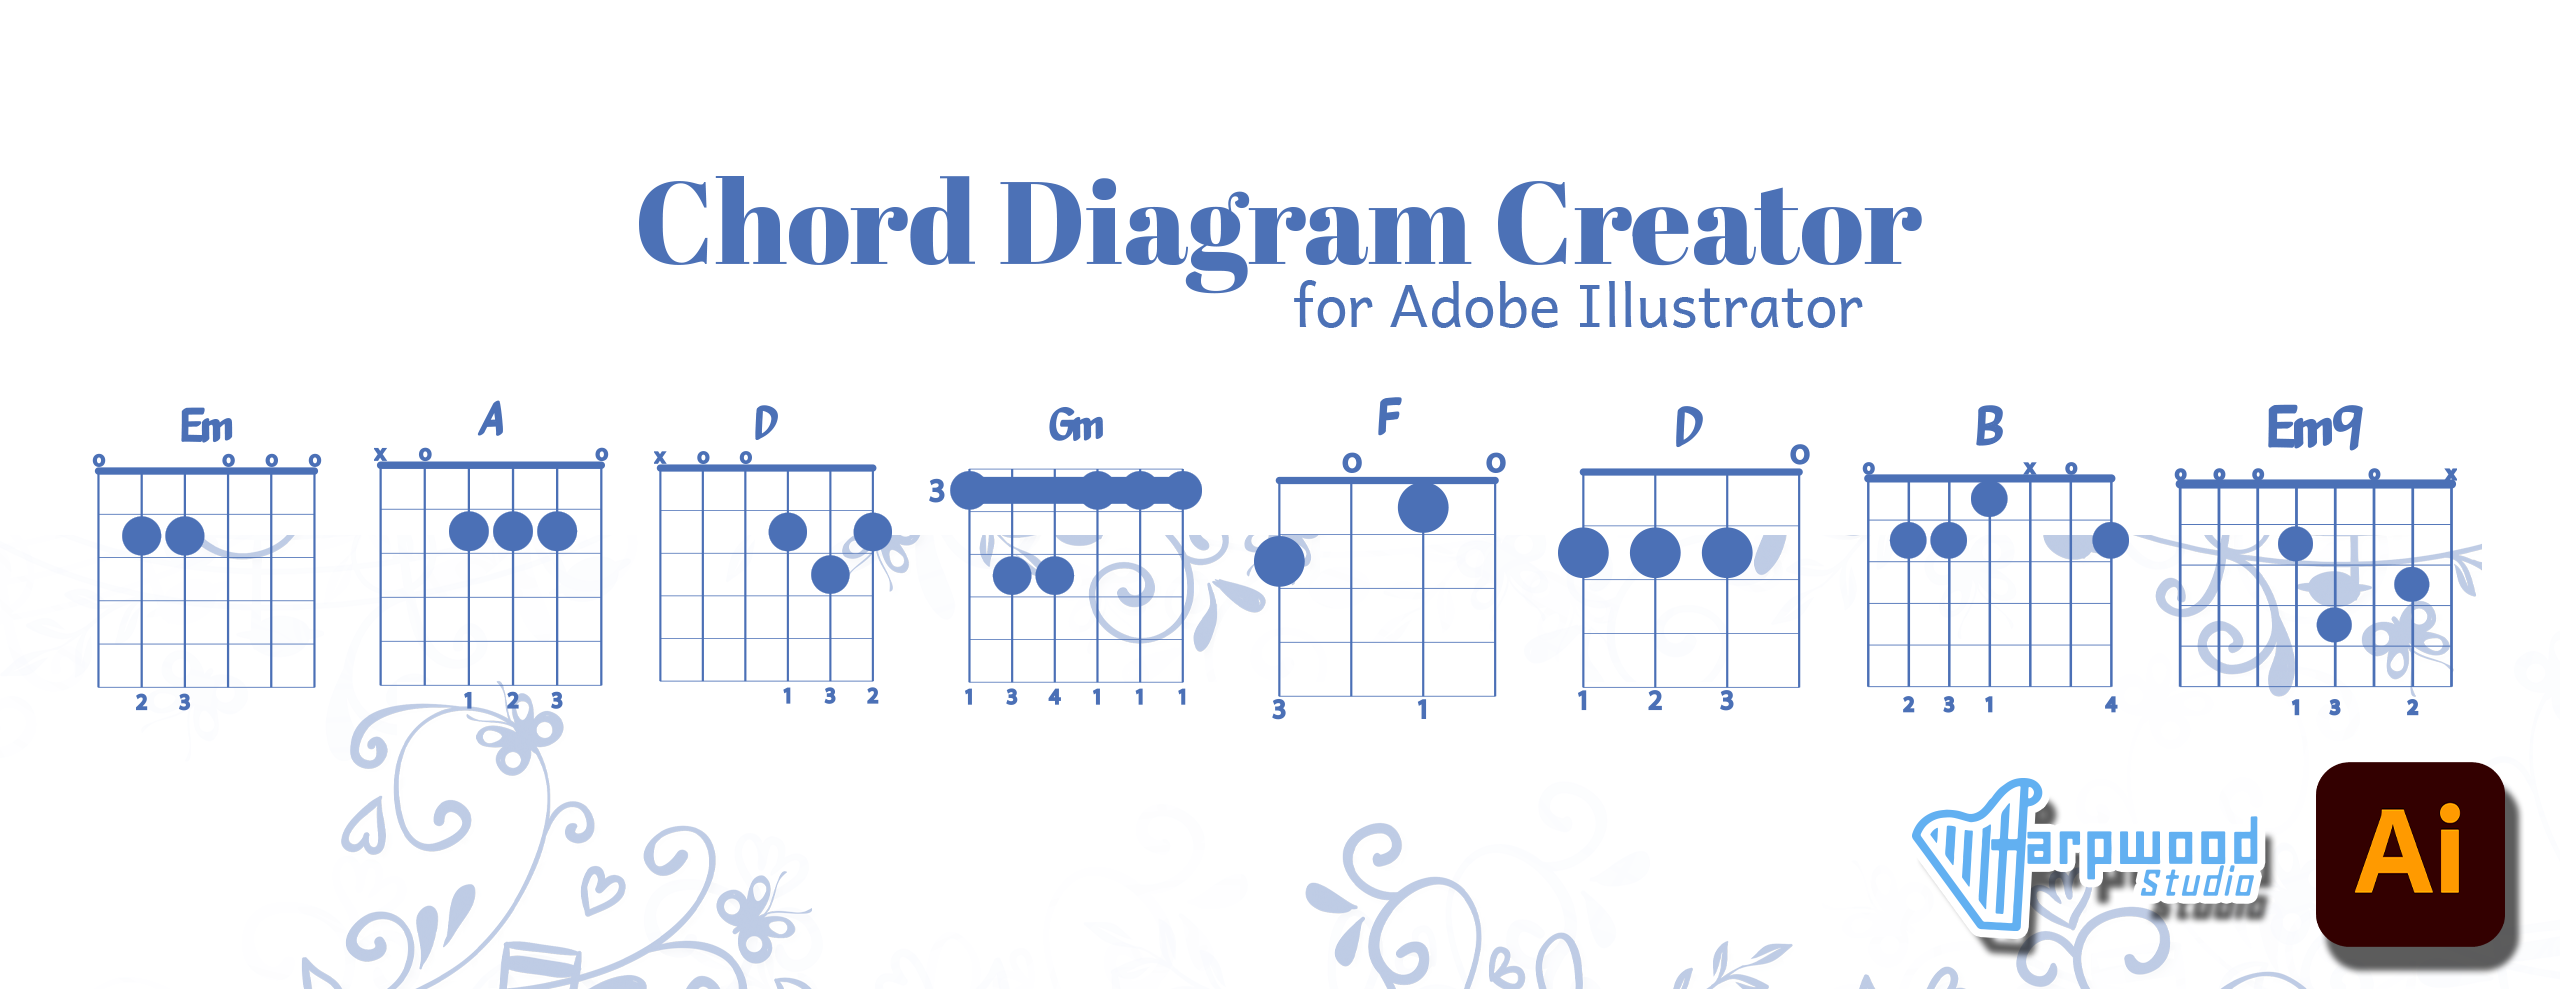 Chord Diagram Creator for Adobe Illustrator